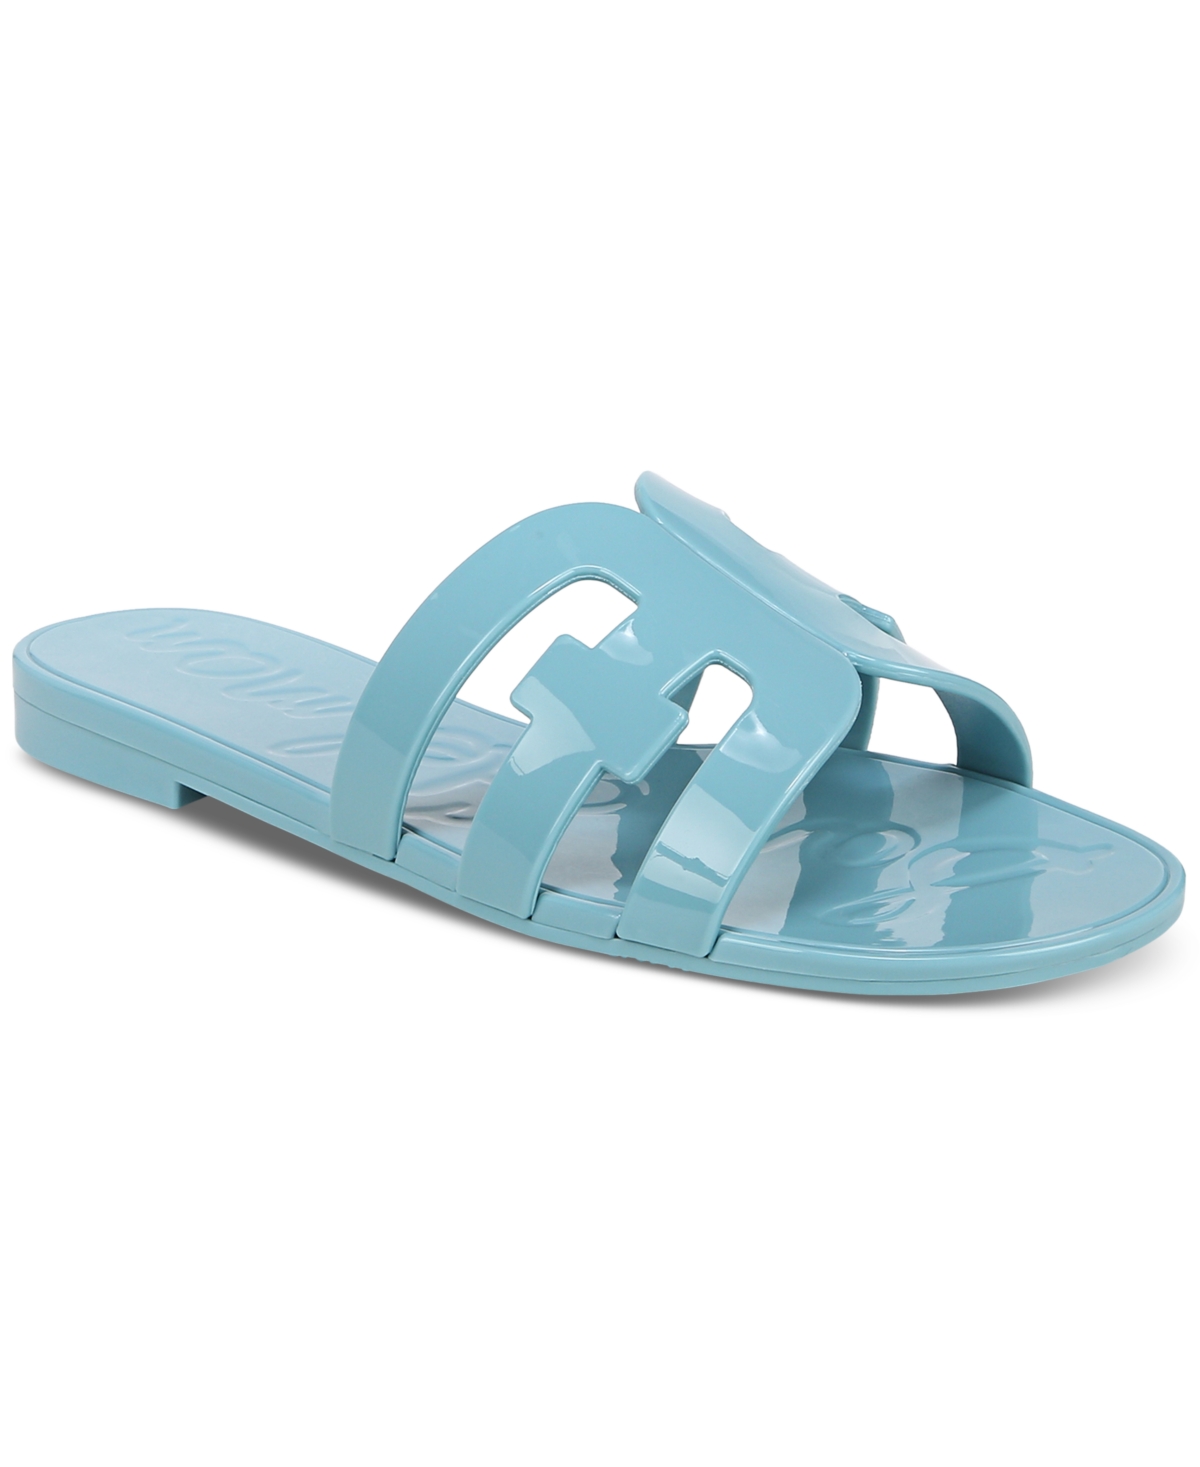 Women's Bay Logo Emblem Jelly Slide Sandals - Blue Reef